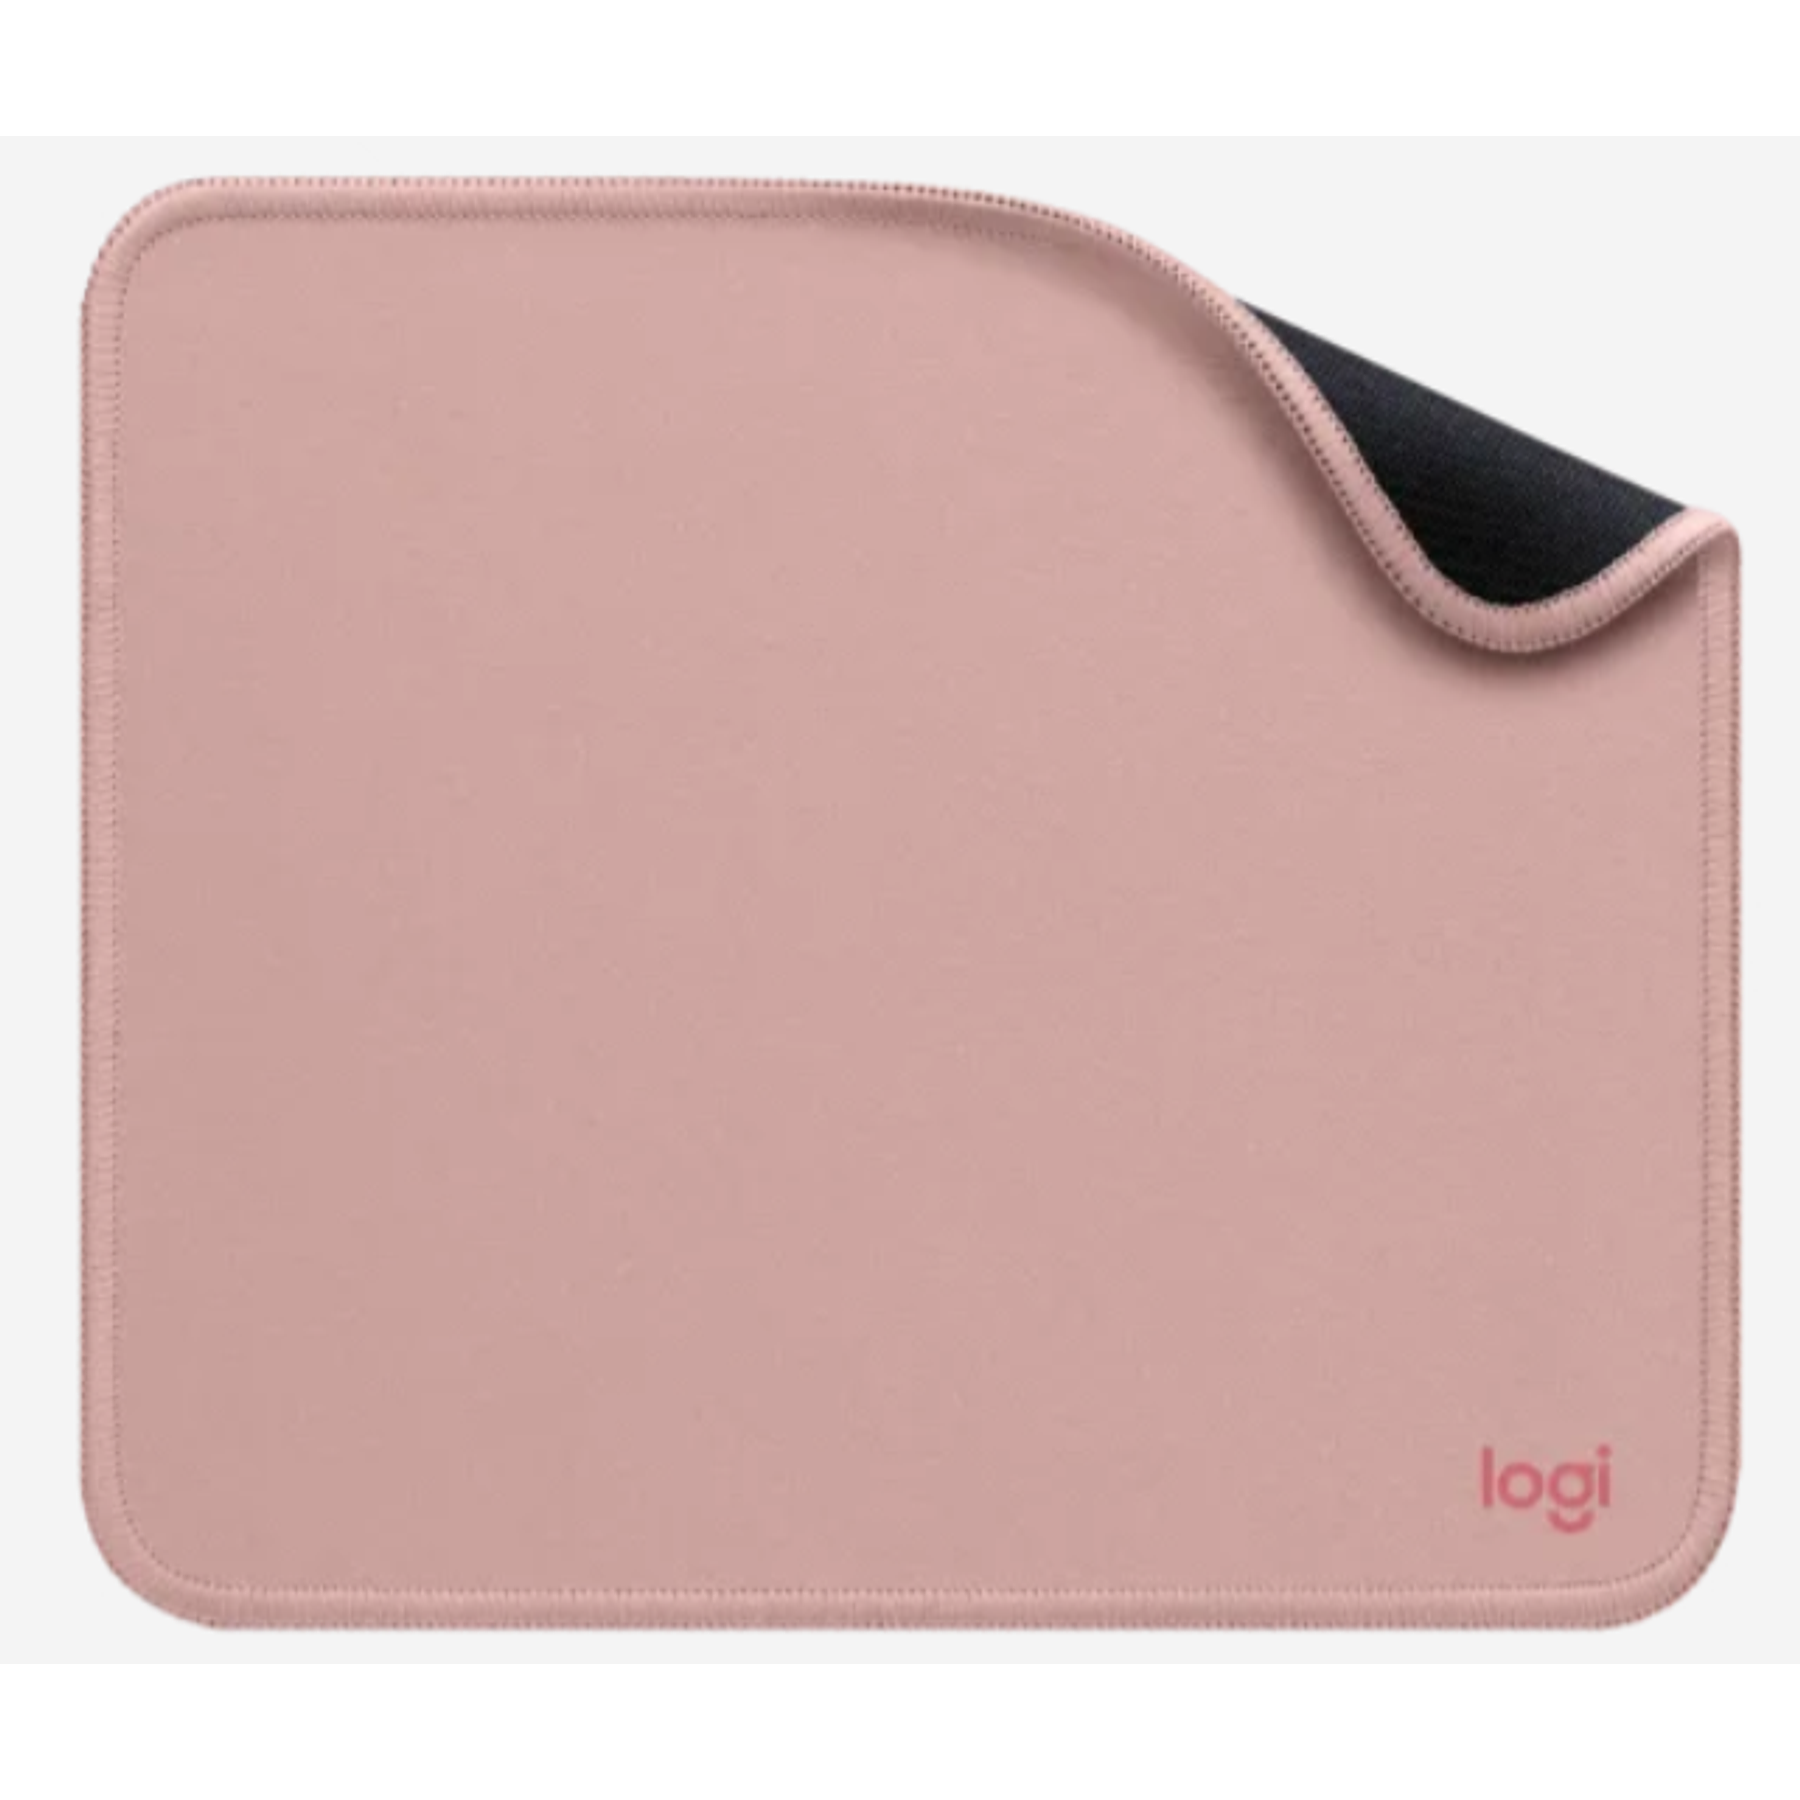 Logitech Mouse Pad Studio Series Color Rosa Oscuro